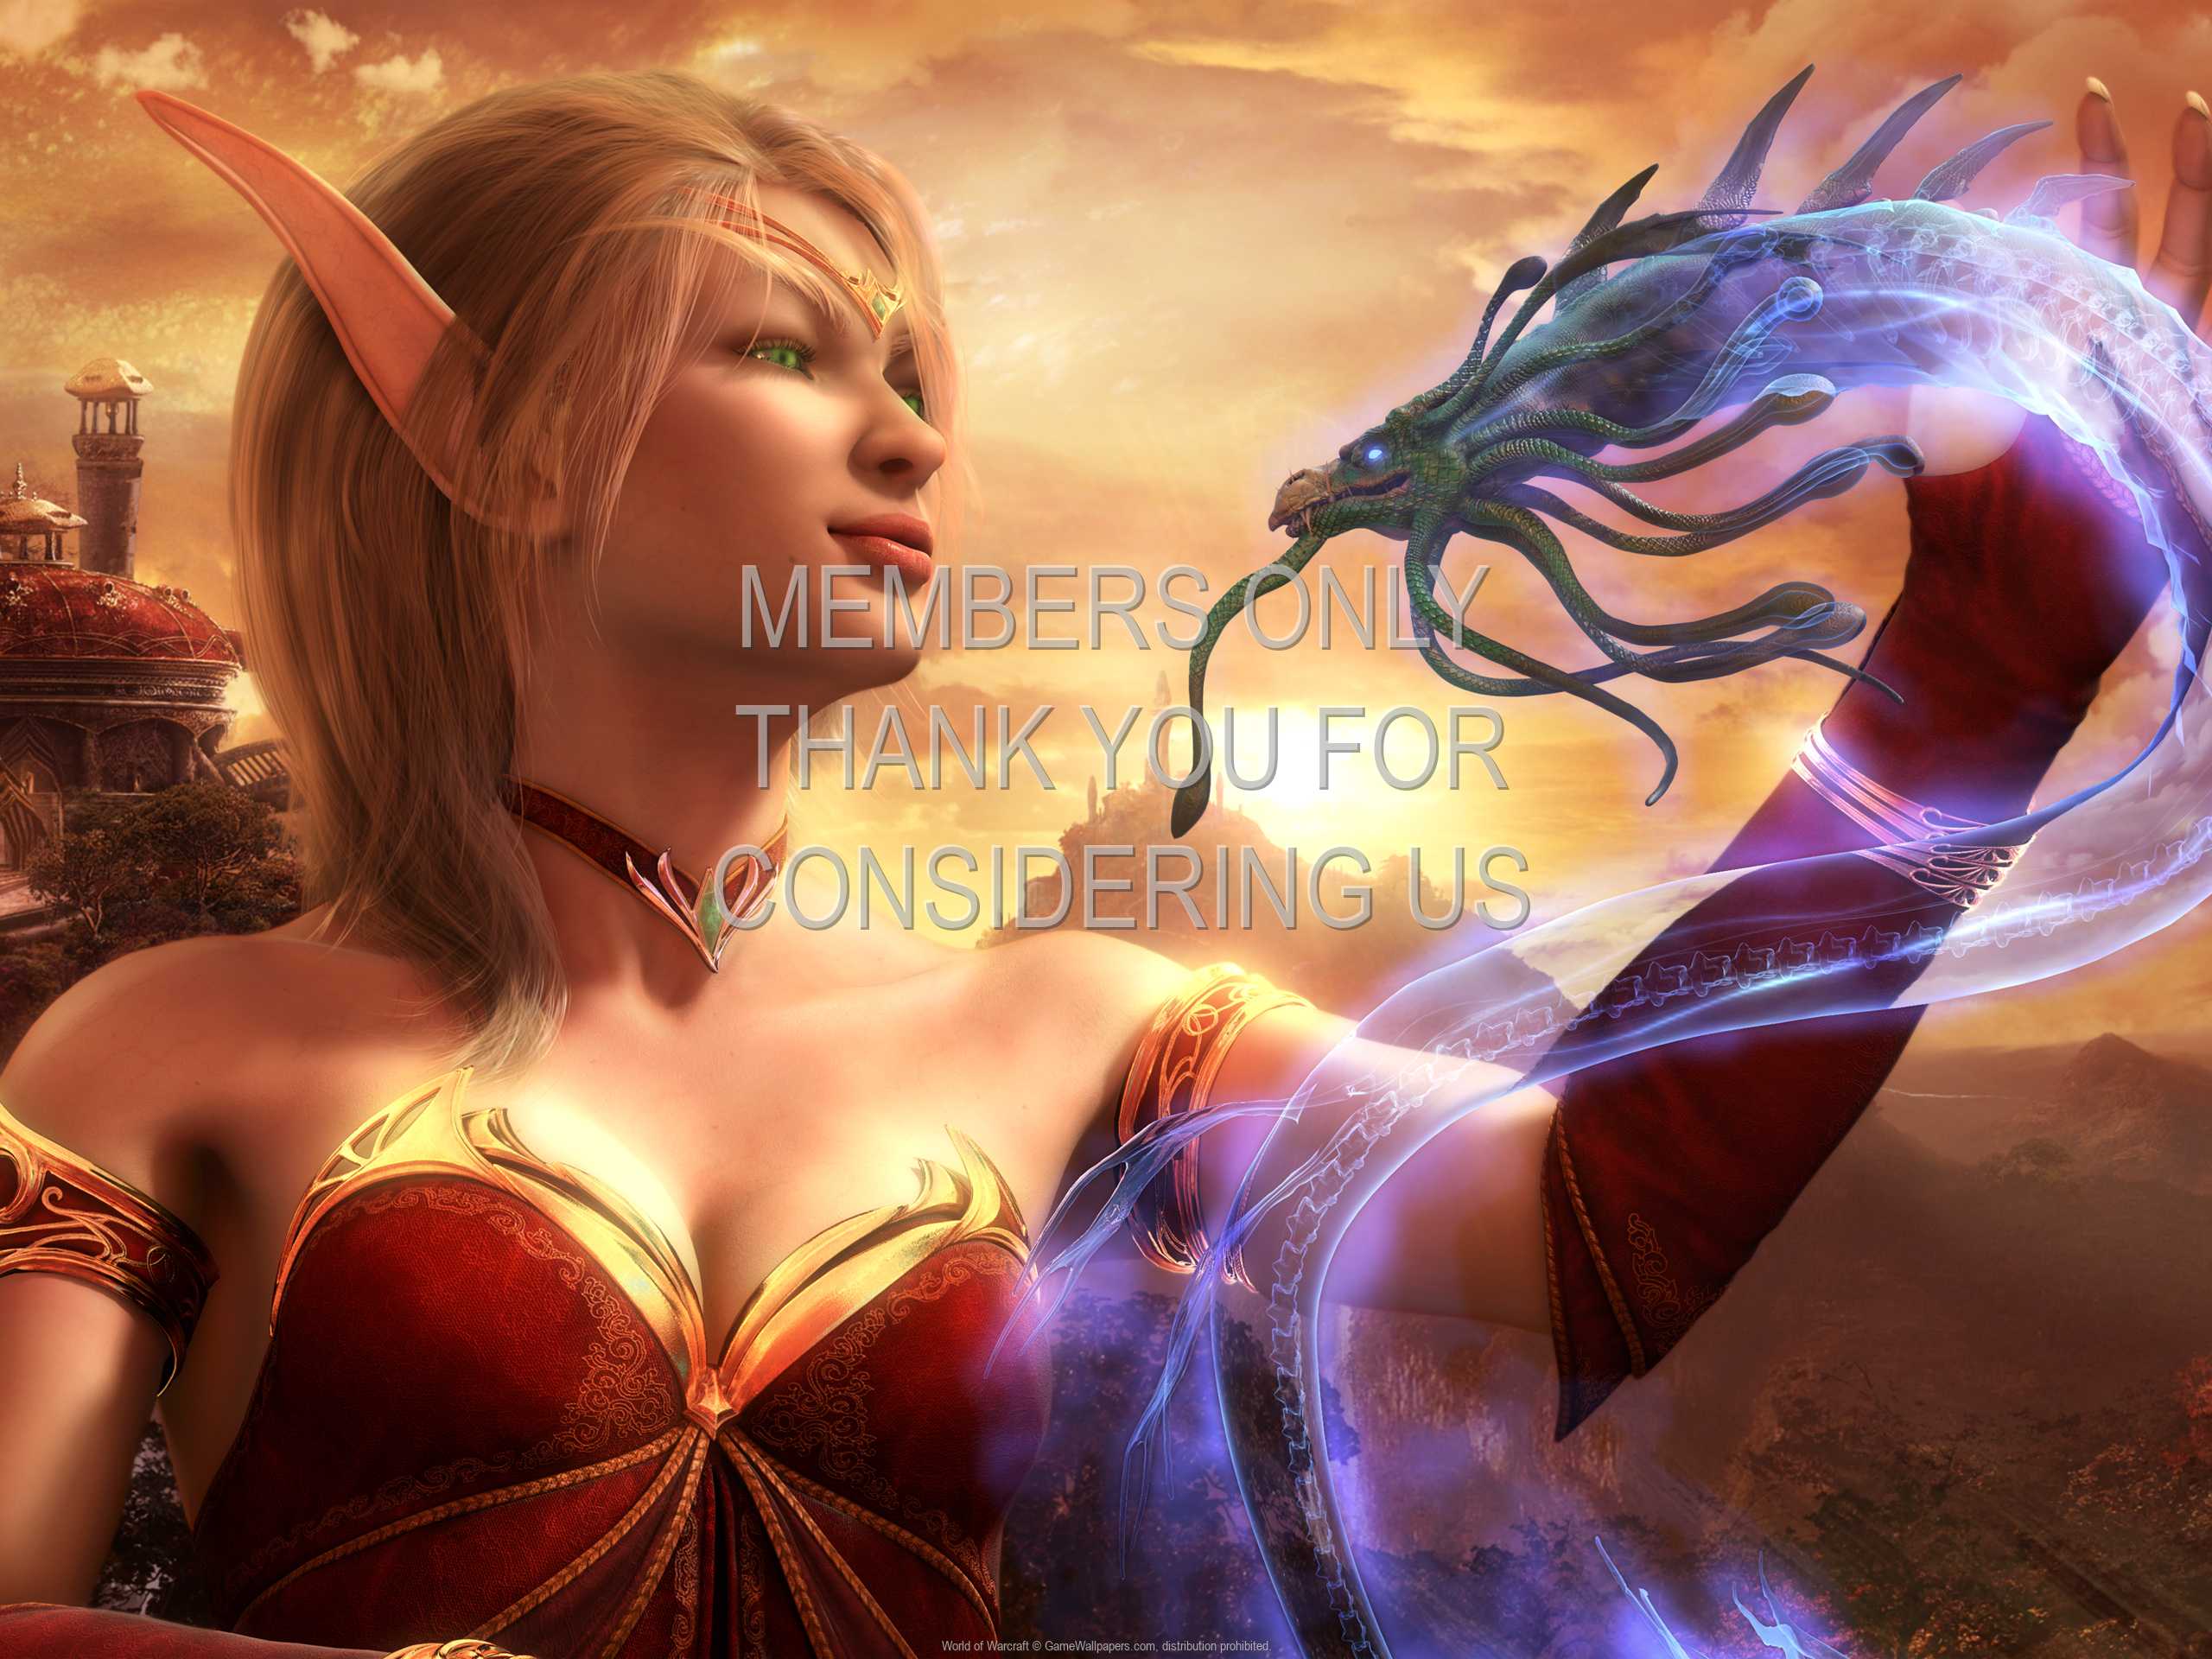 World of Warcraft 1080p Horizontal Mobile wallpaper or background 10